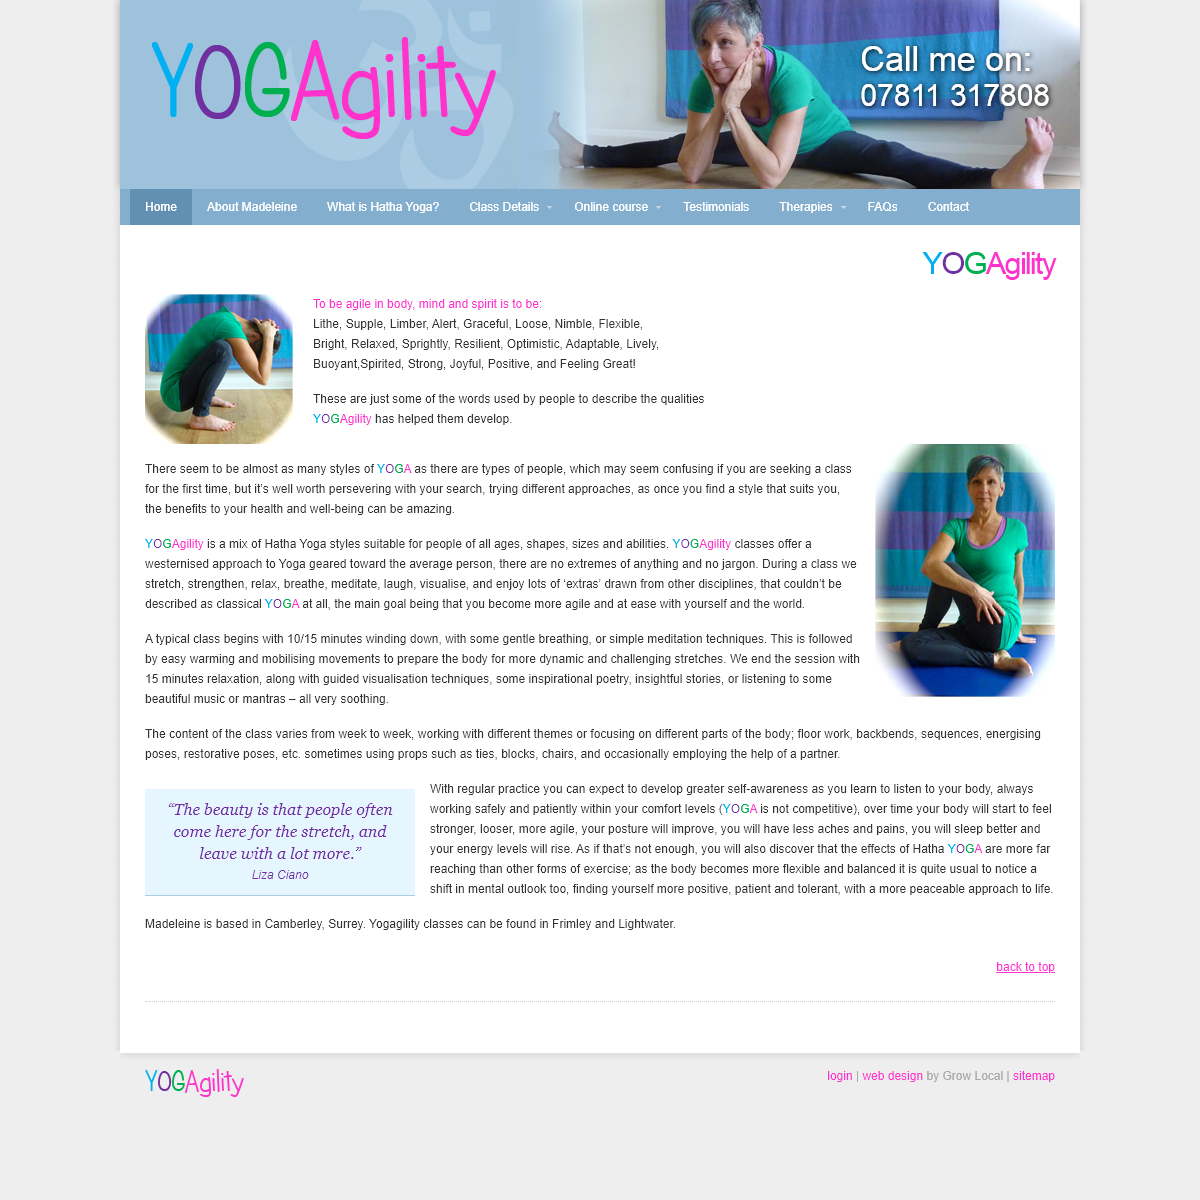 A complete backup of yogagility.co.uk